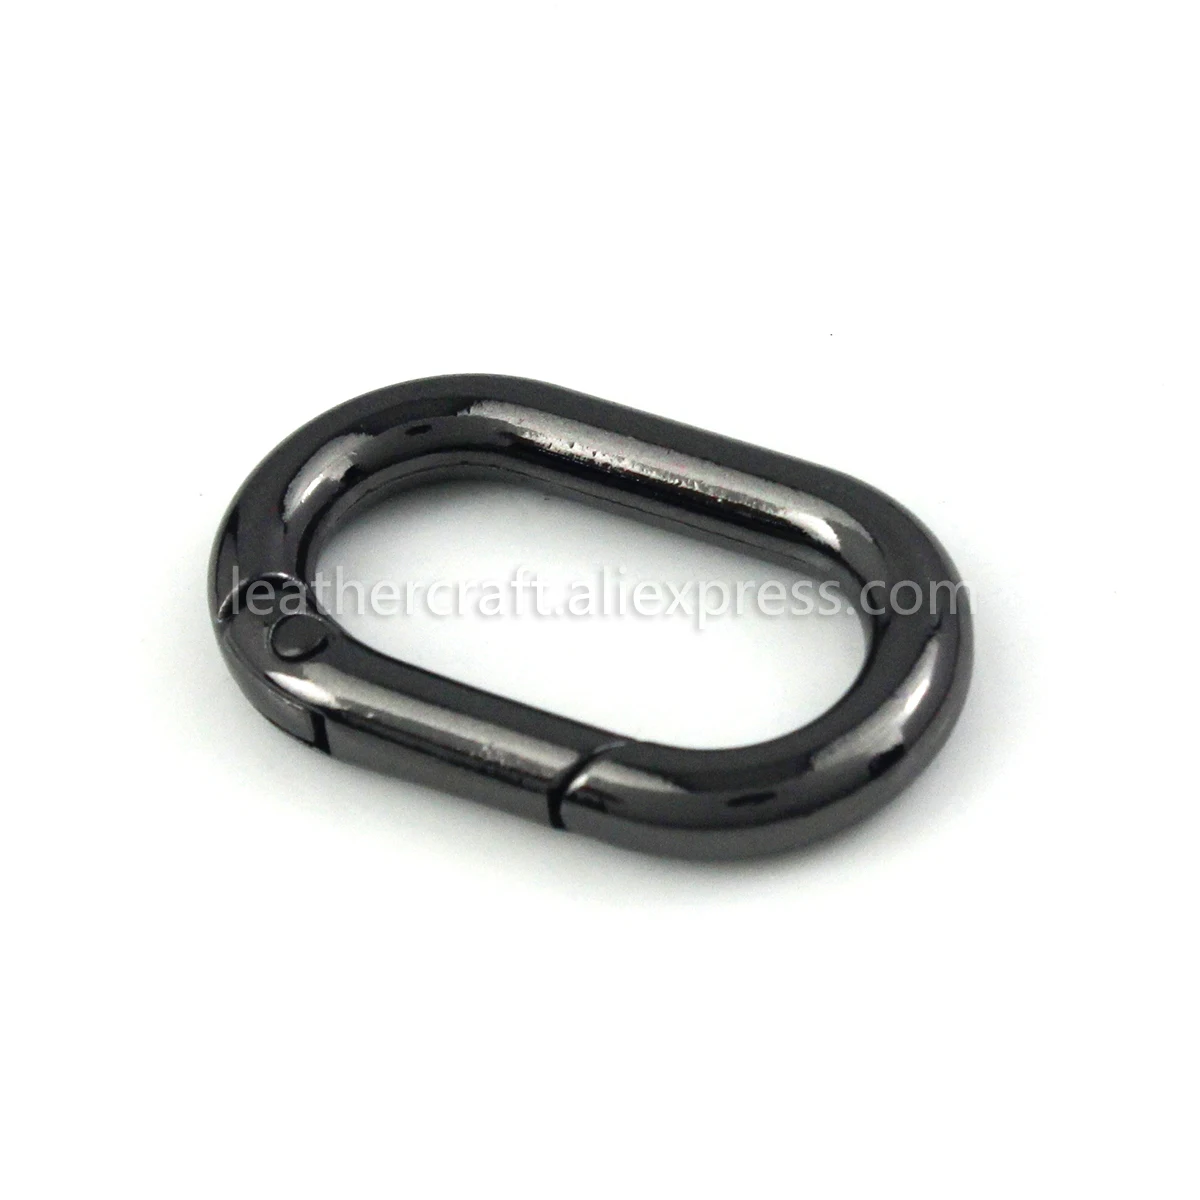 1x Metal Oval Ring Snap Hook Spring Gate Trigger Clasps Clips for Leather Craft Belt Strap Webbing Keychain Hooks - Цвет: Gun Black